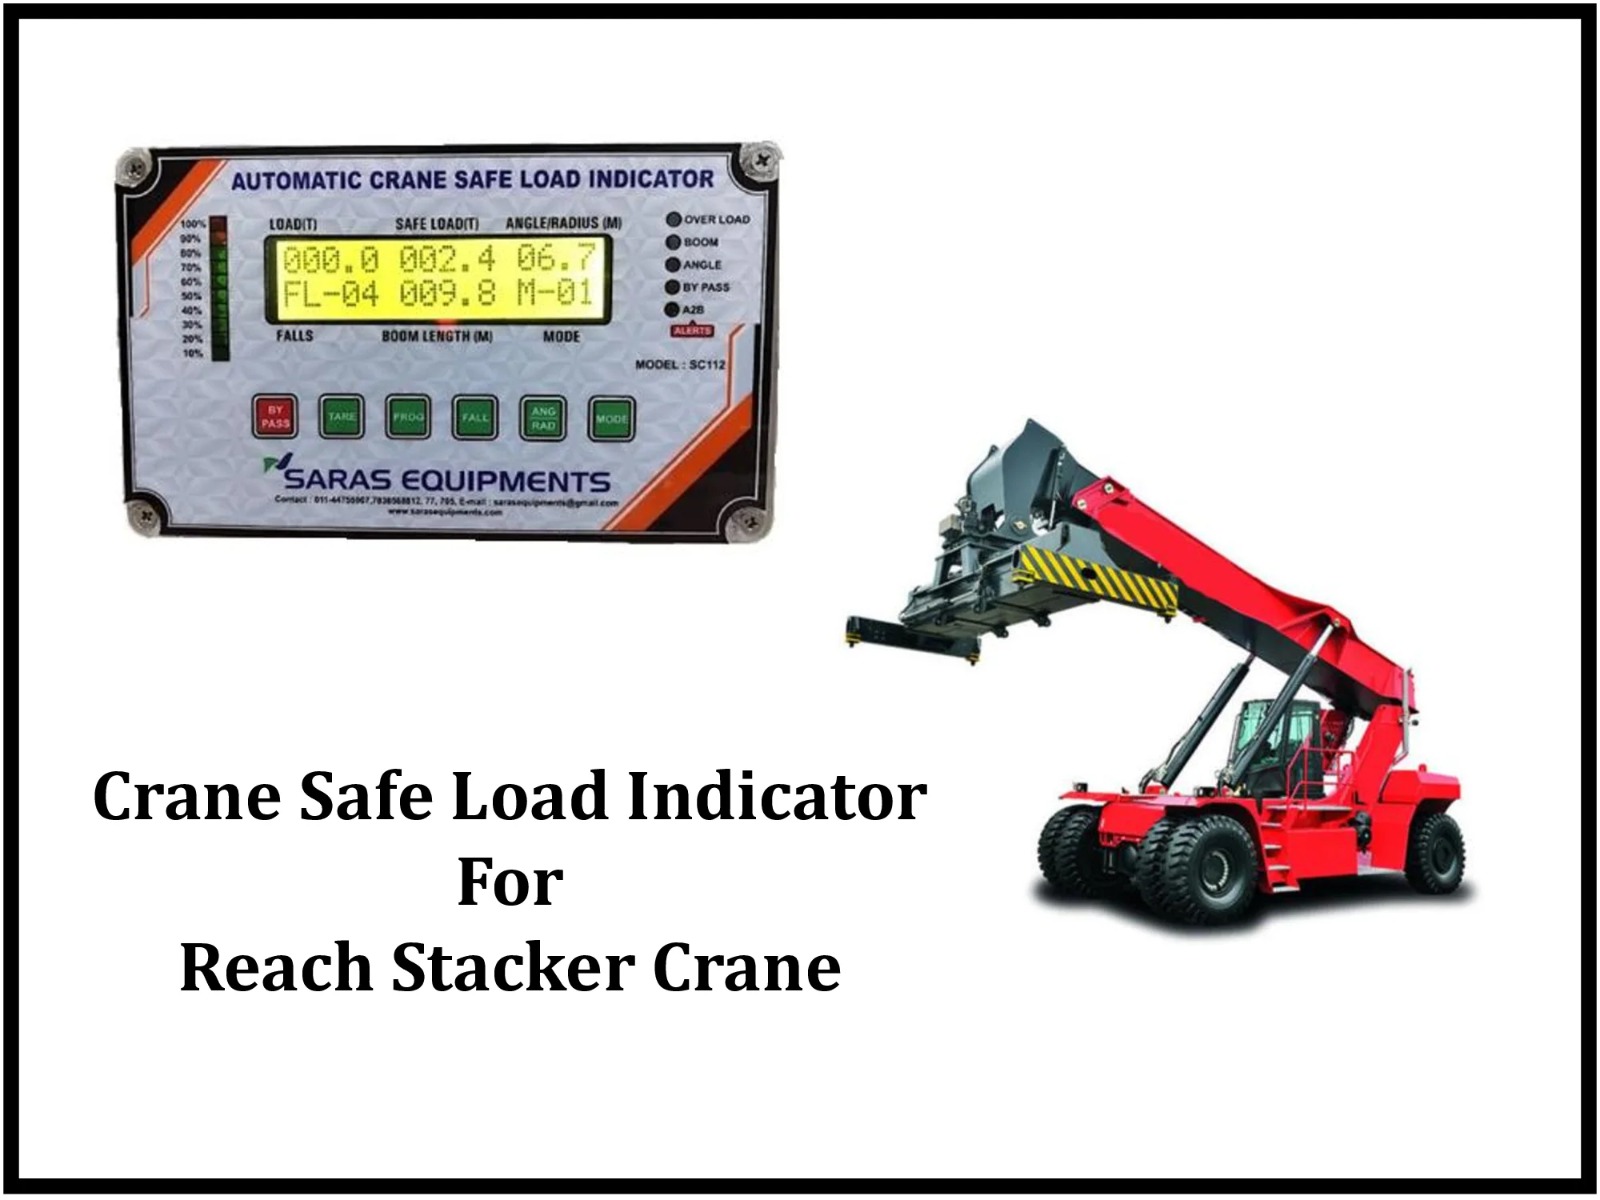 Crane Safe Load Indicator for Reach Stacker Crane